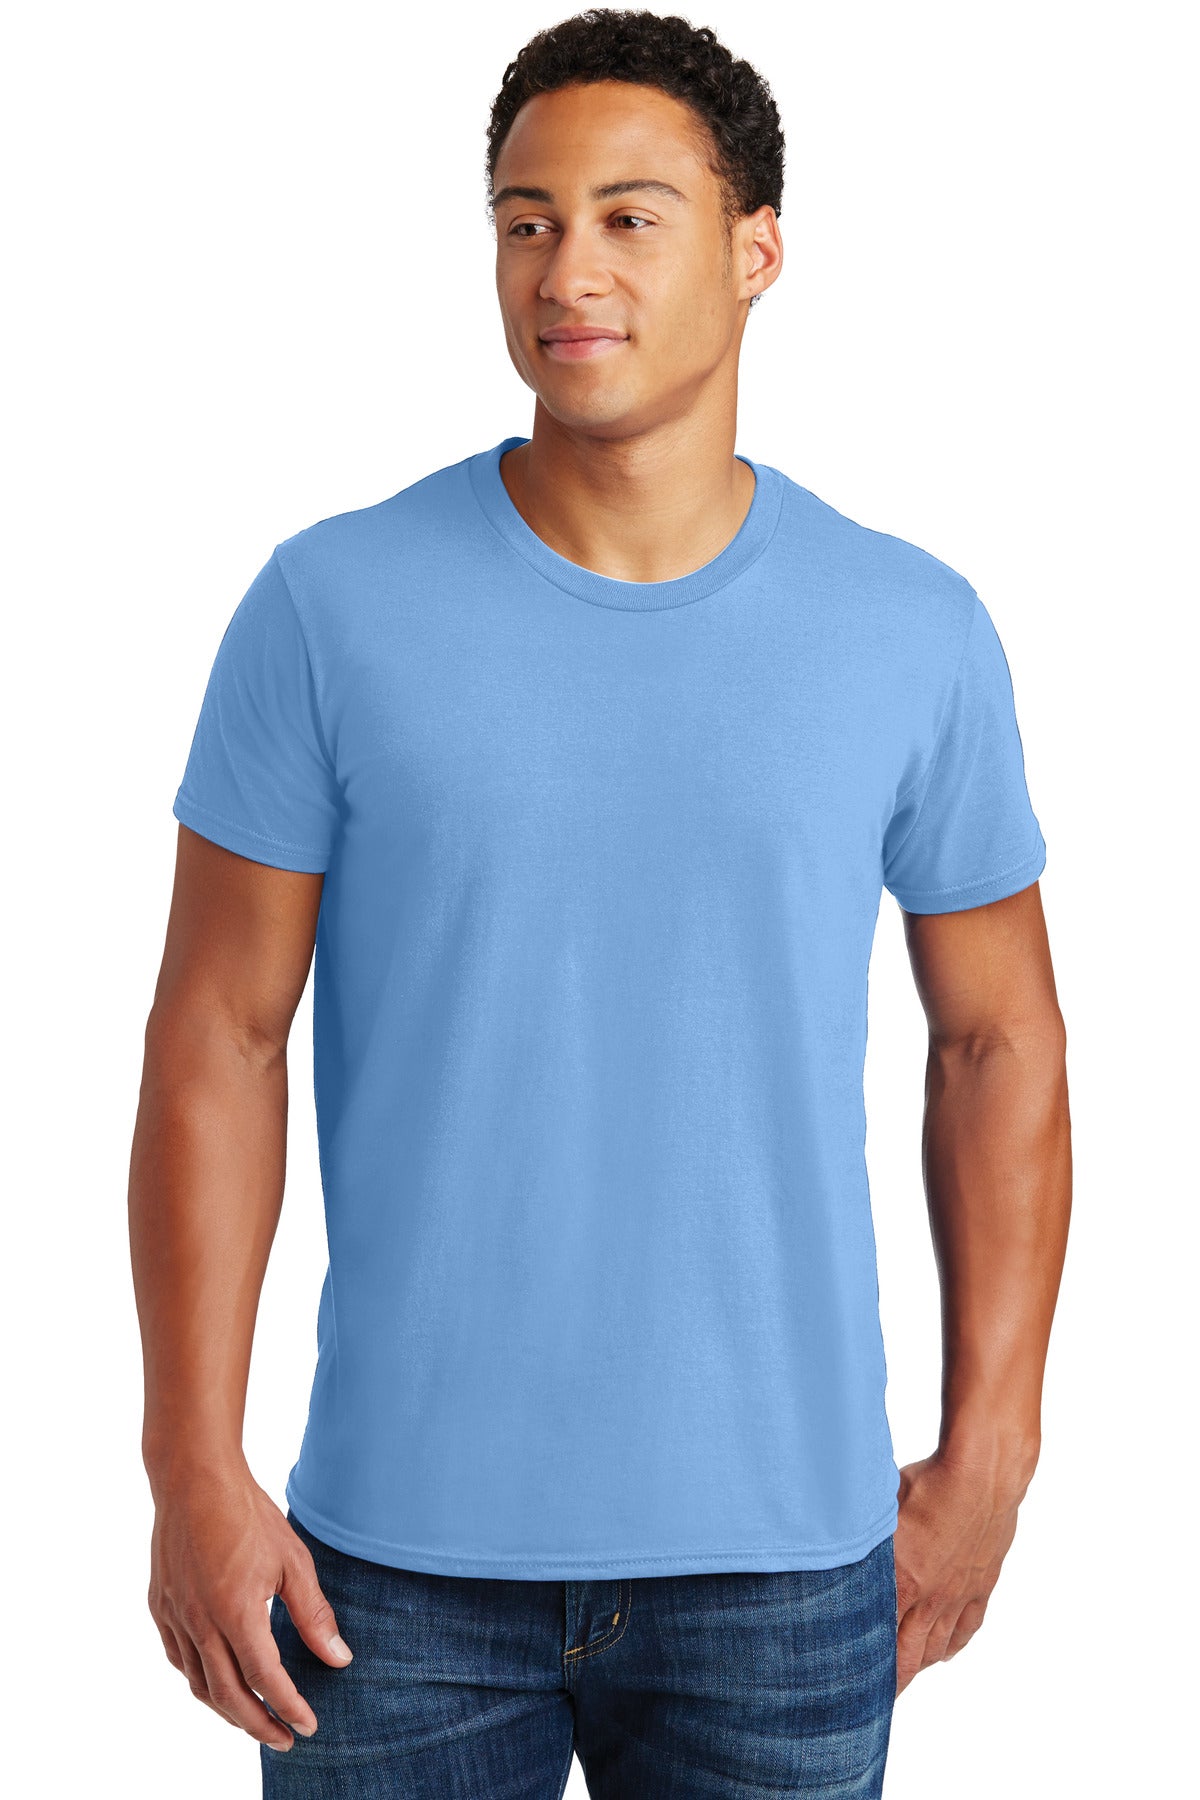 Hanes® - Perfect-T Cotton T-Shirt. 4980 - DFW Impression